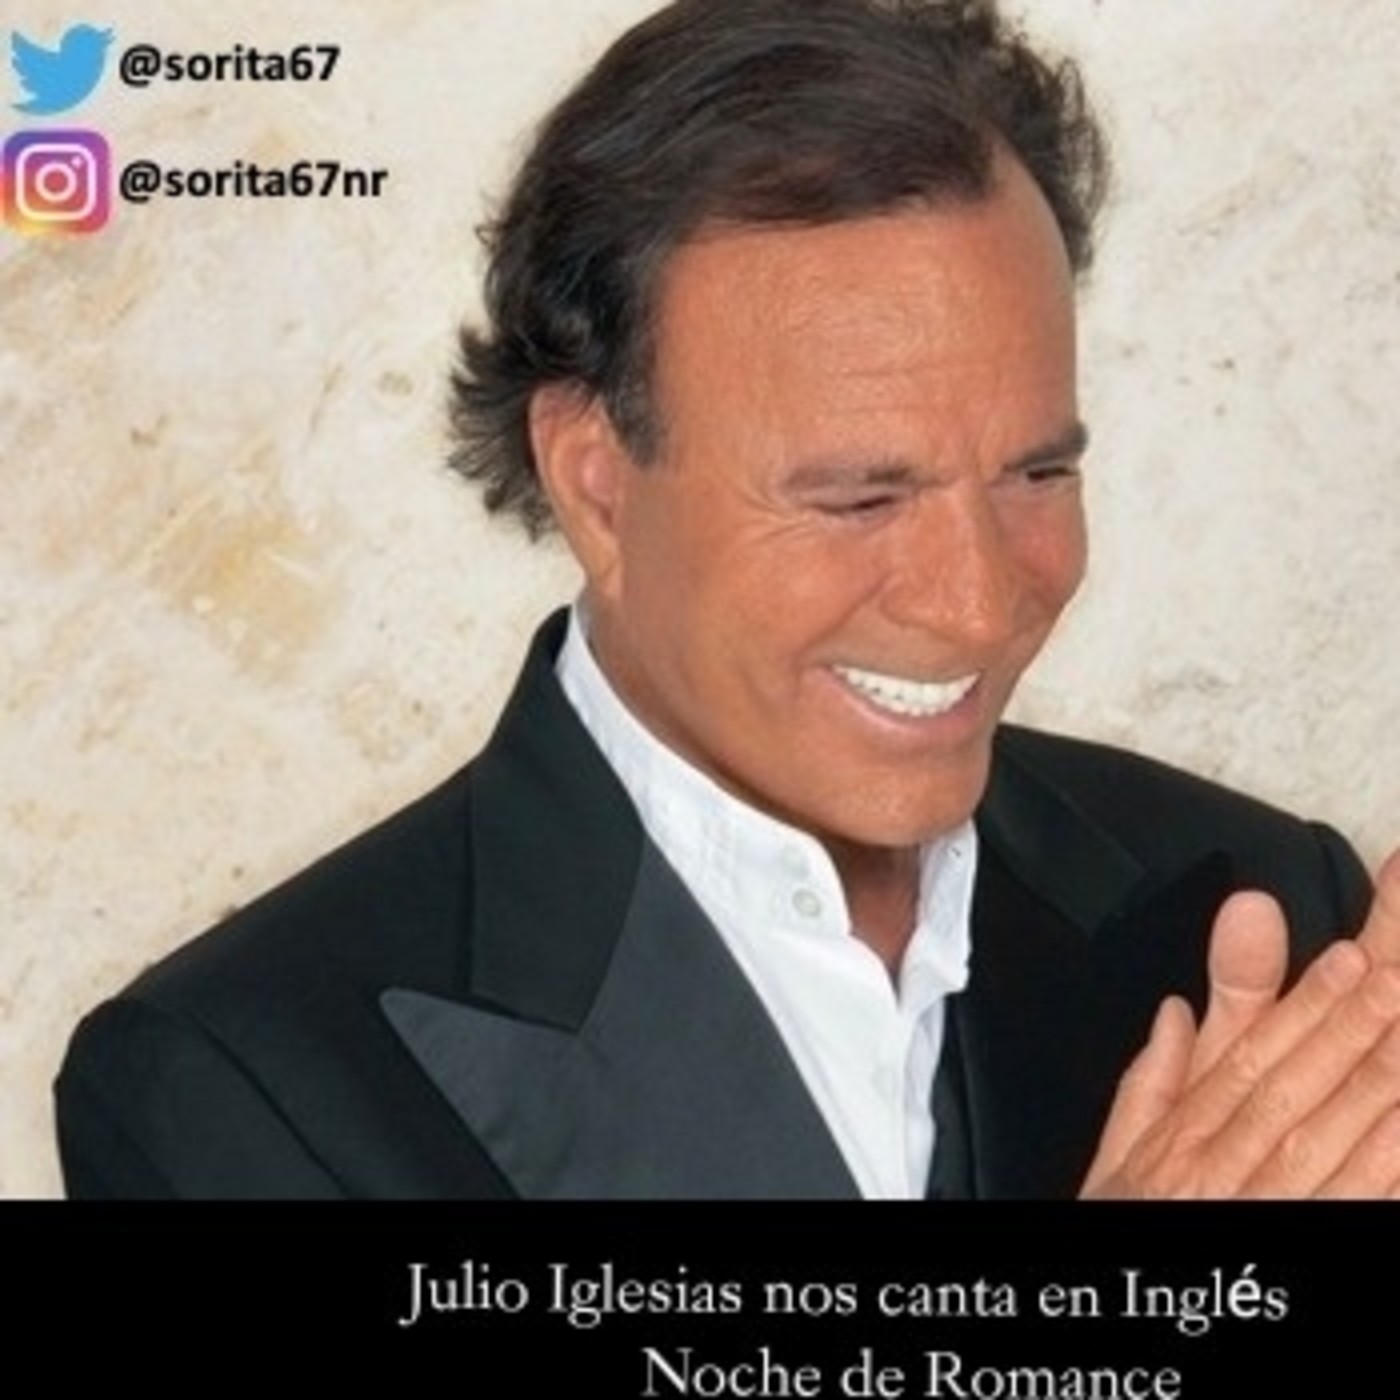 Julio Iglesias canta en inglés en Noche de Romance